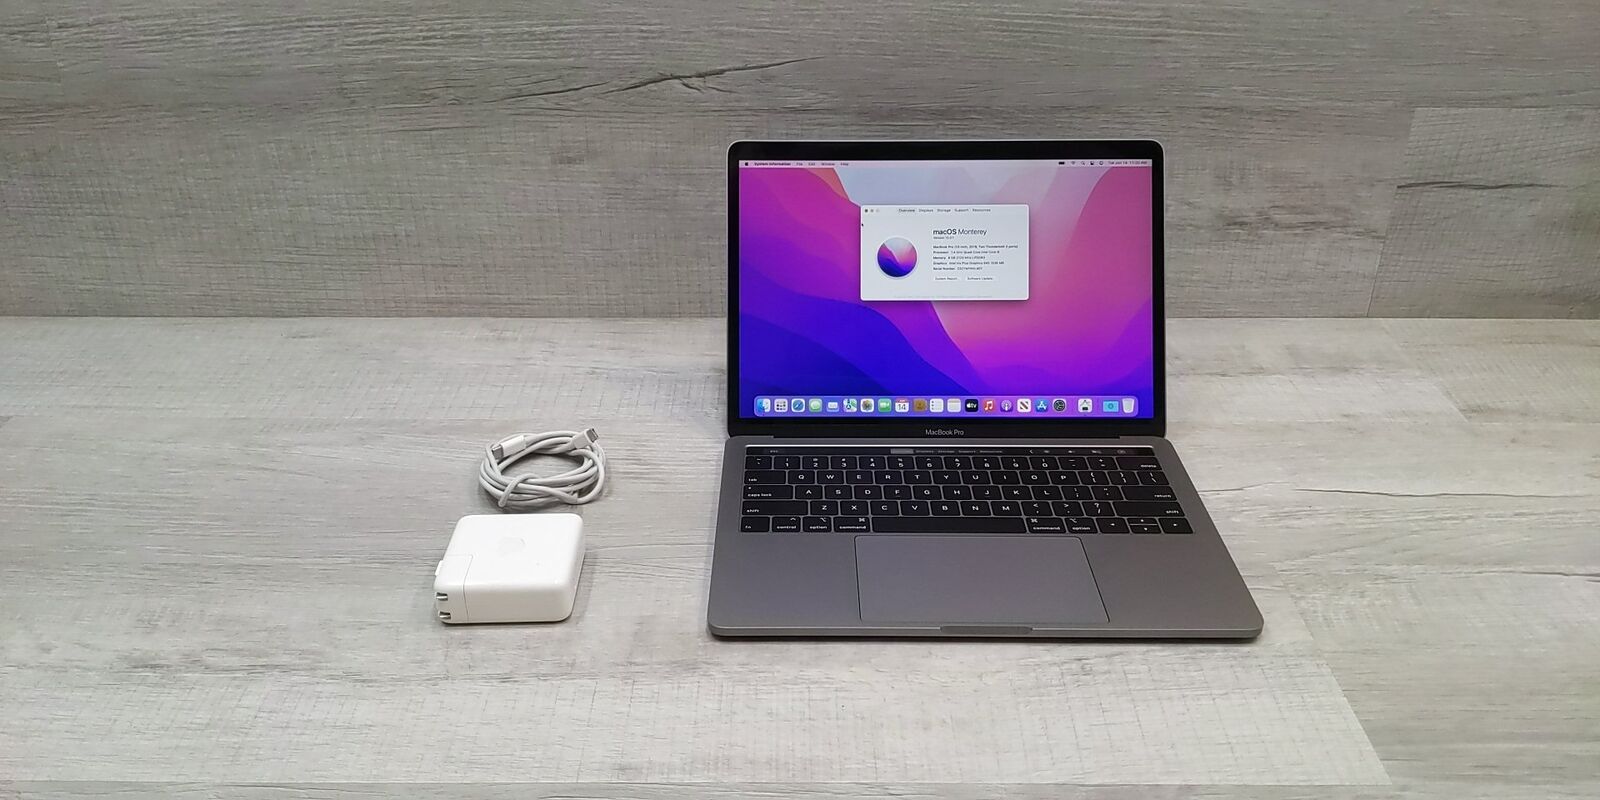 Apple MacBook Pro (13-inch 2019) 1.4 GHz Intel core i5 128GB SSD 8GB RAM